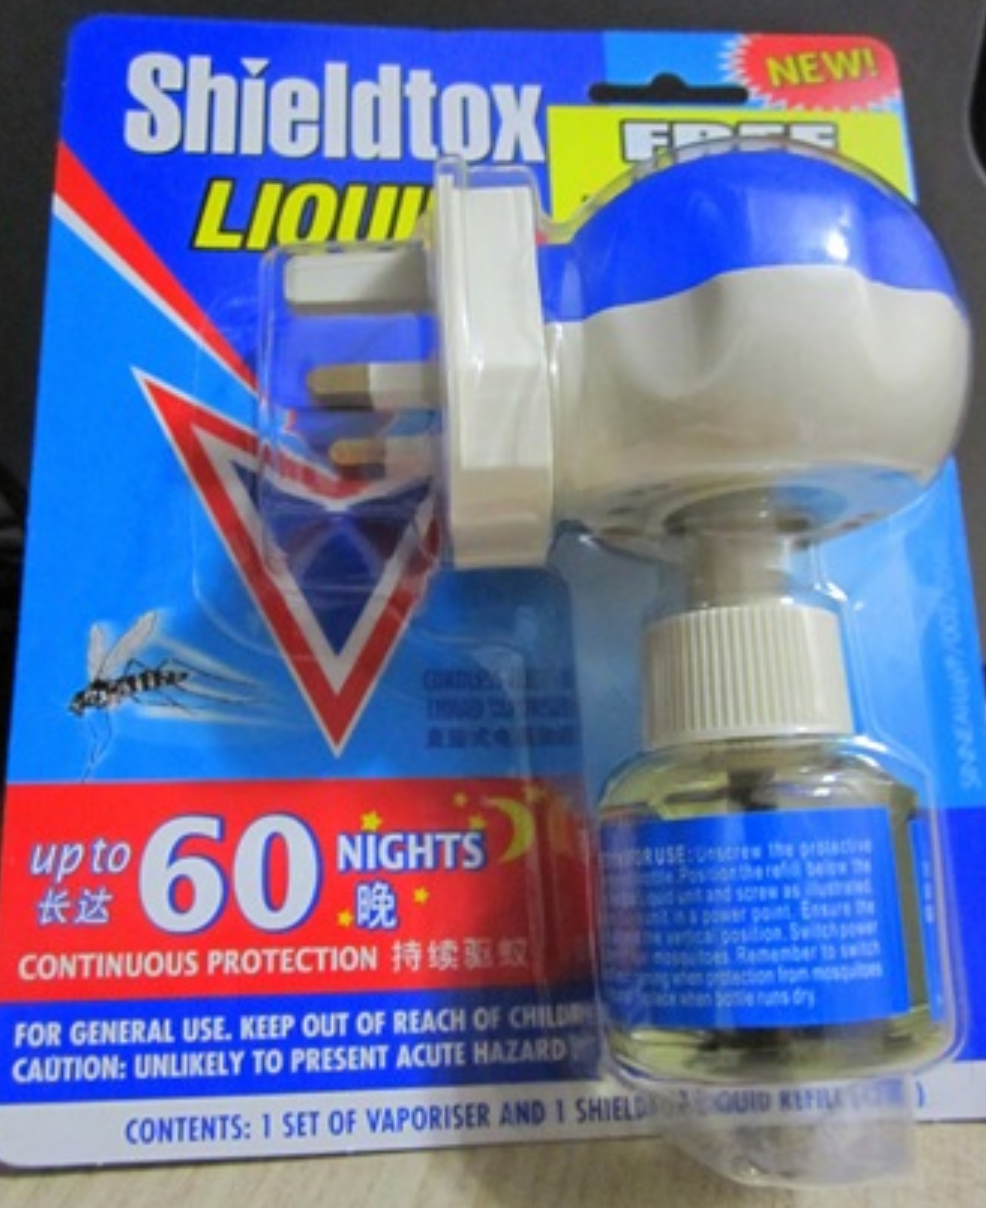 Shieldtox Liquid Vaporized Mosquito Repellent reviews